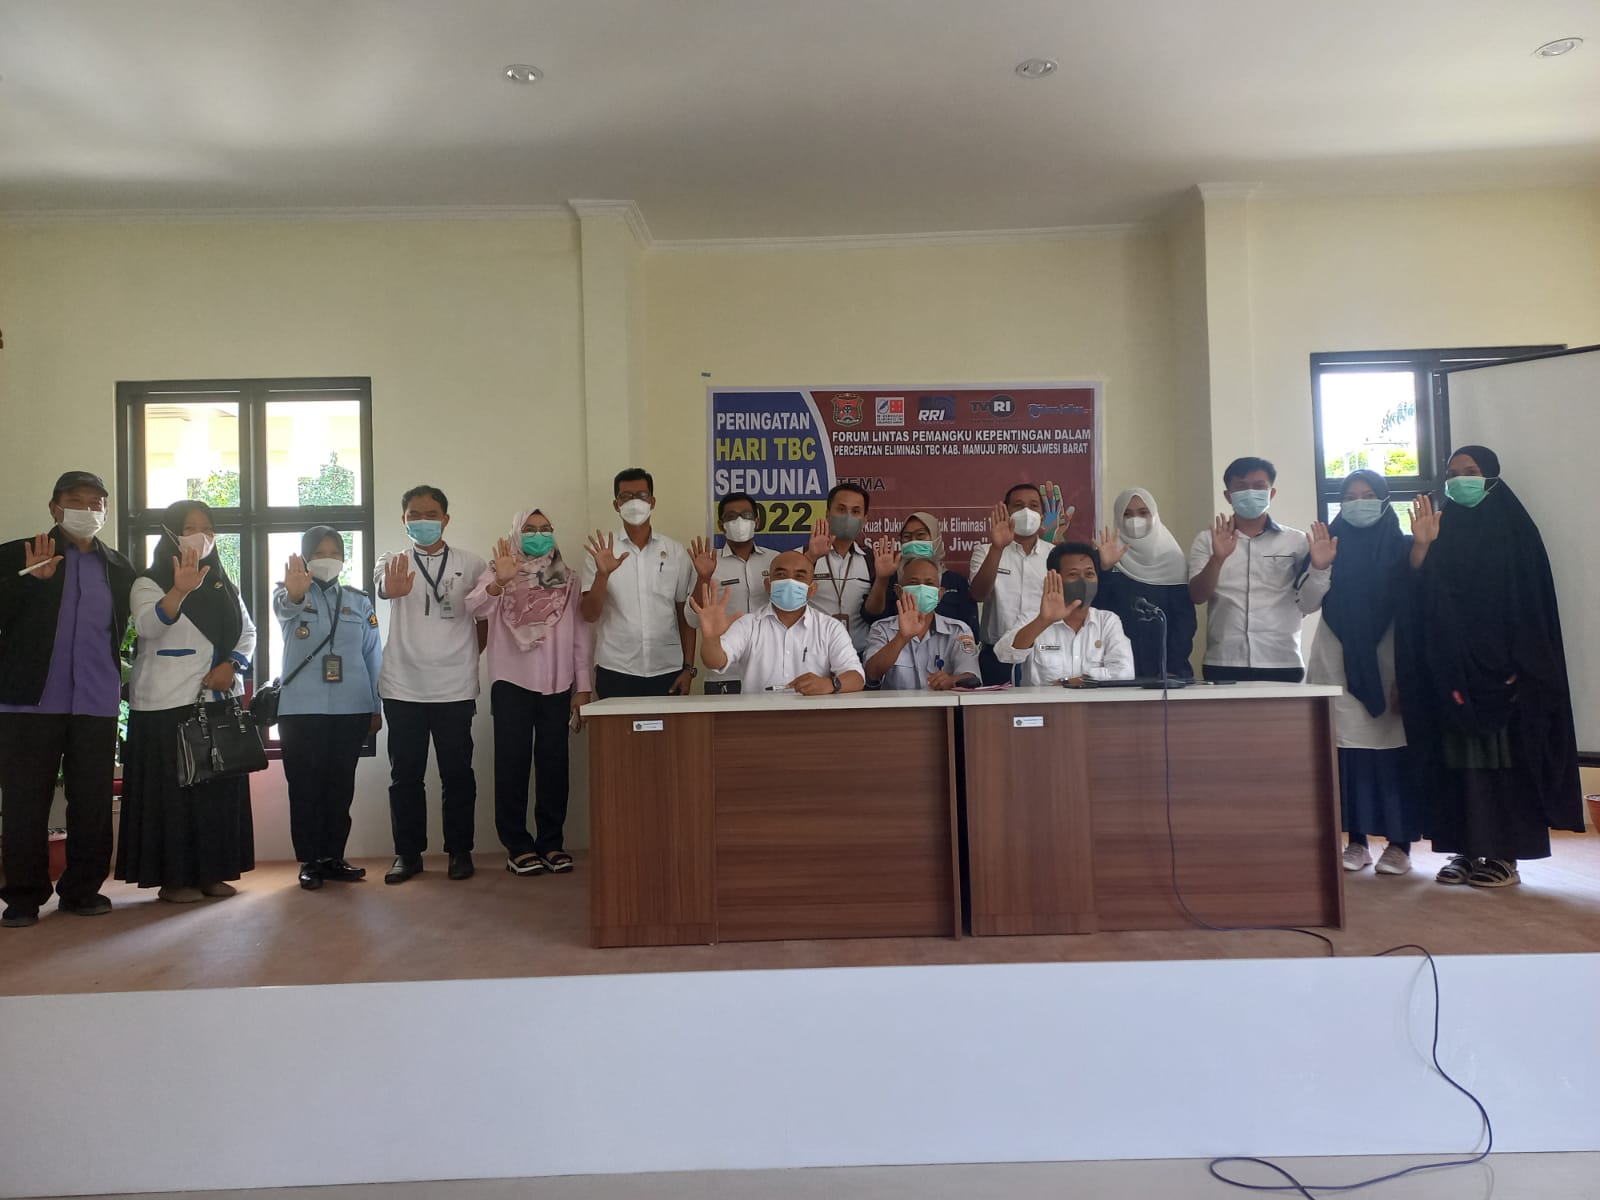 Kasus TBC di Mamuju Sulawesi Barat Mengalami Peningkatan